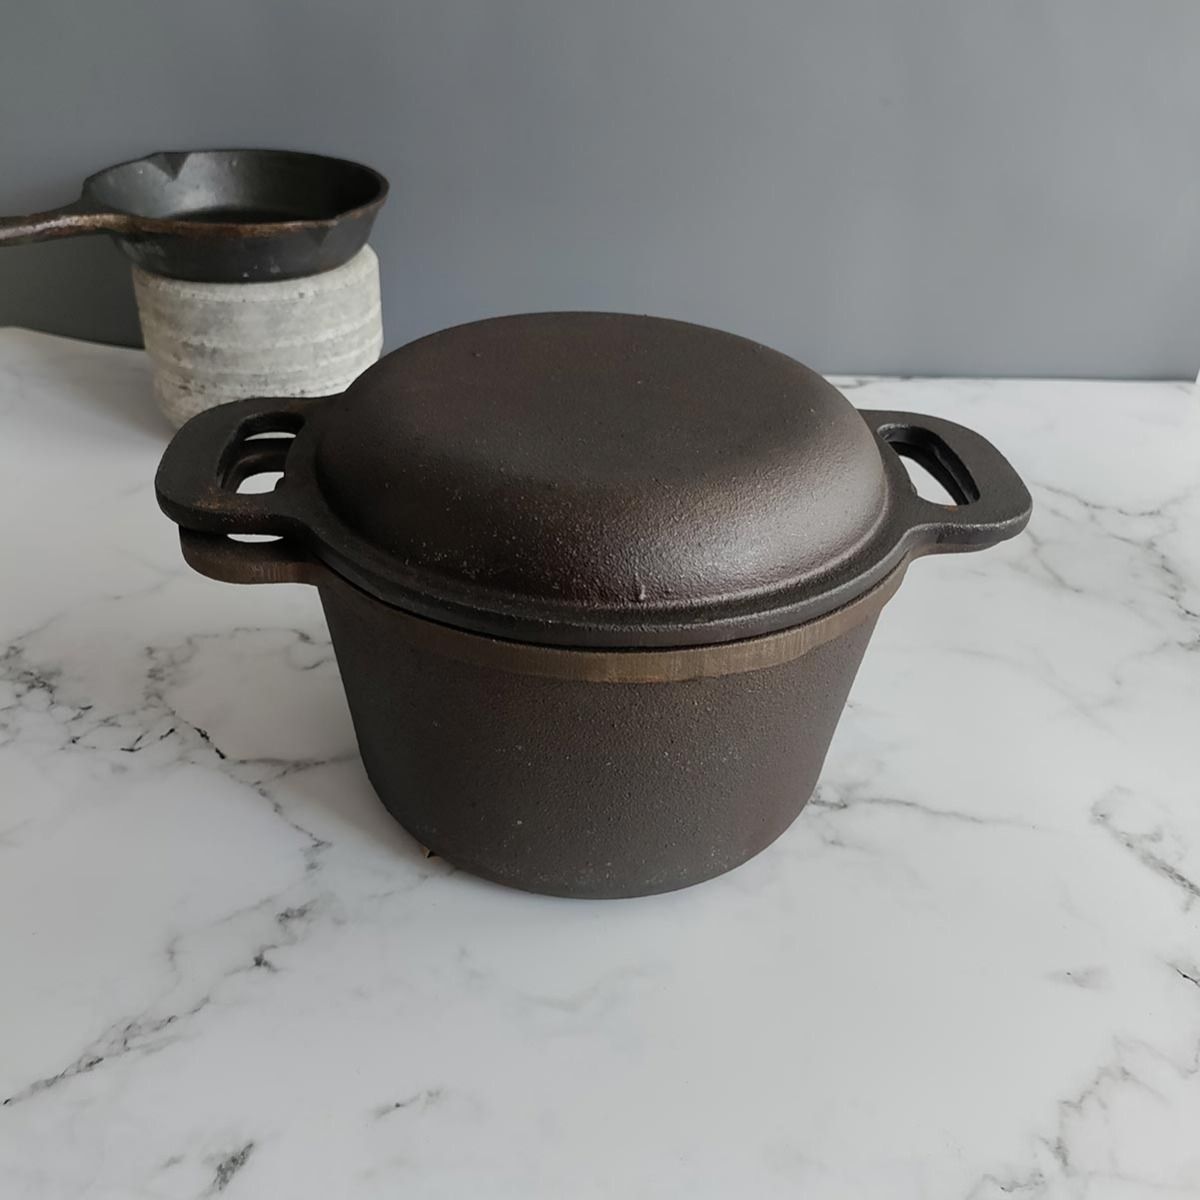 Handmade Cast Iron Cookware, Buy Online Now